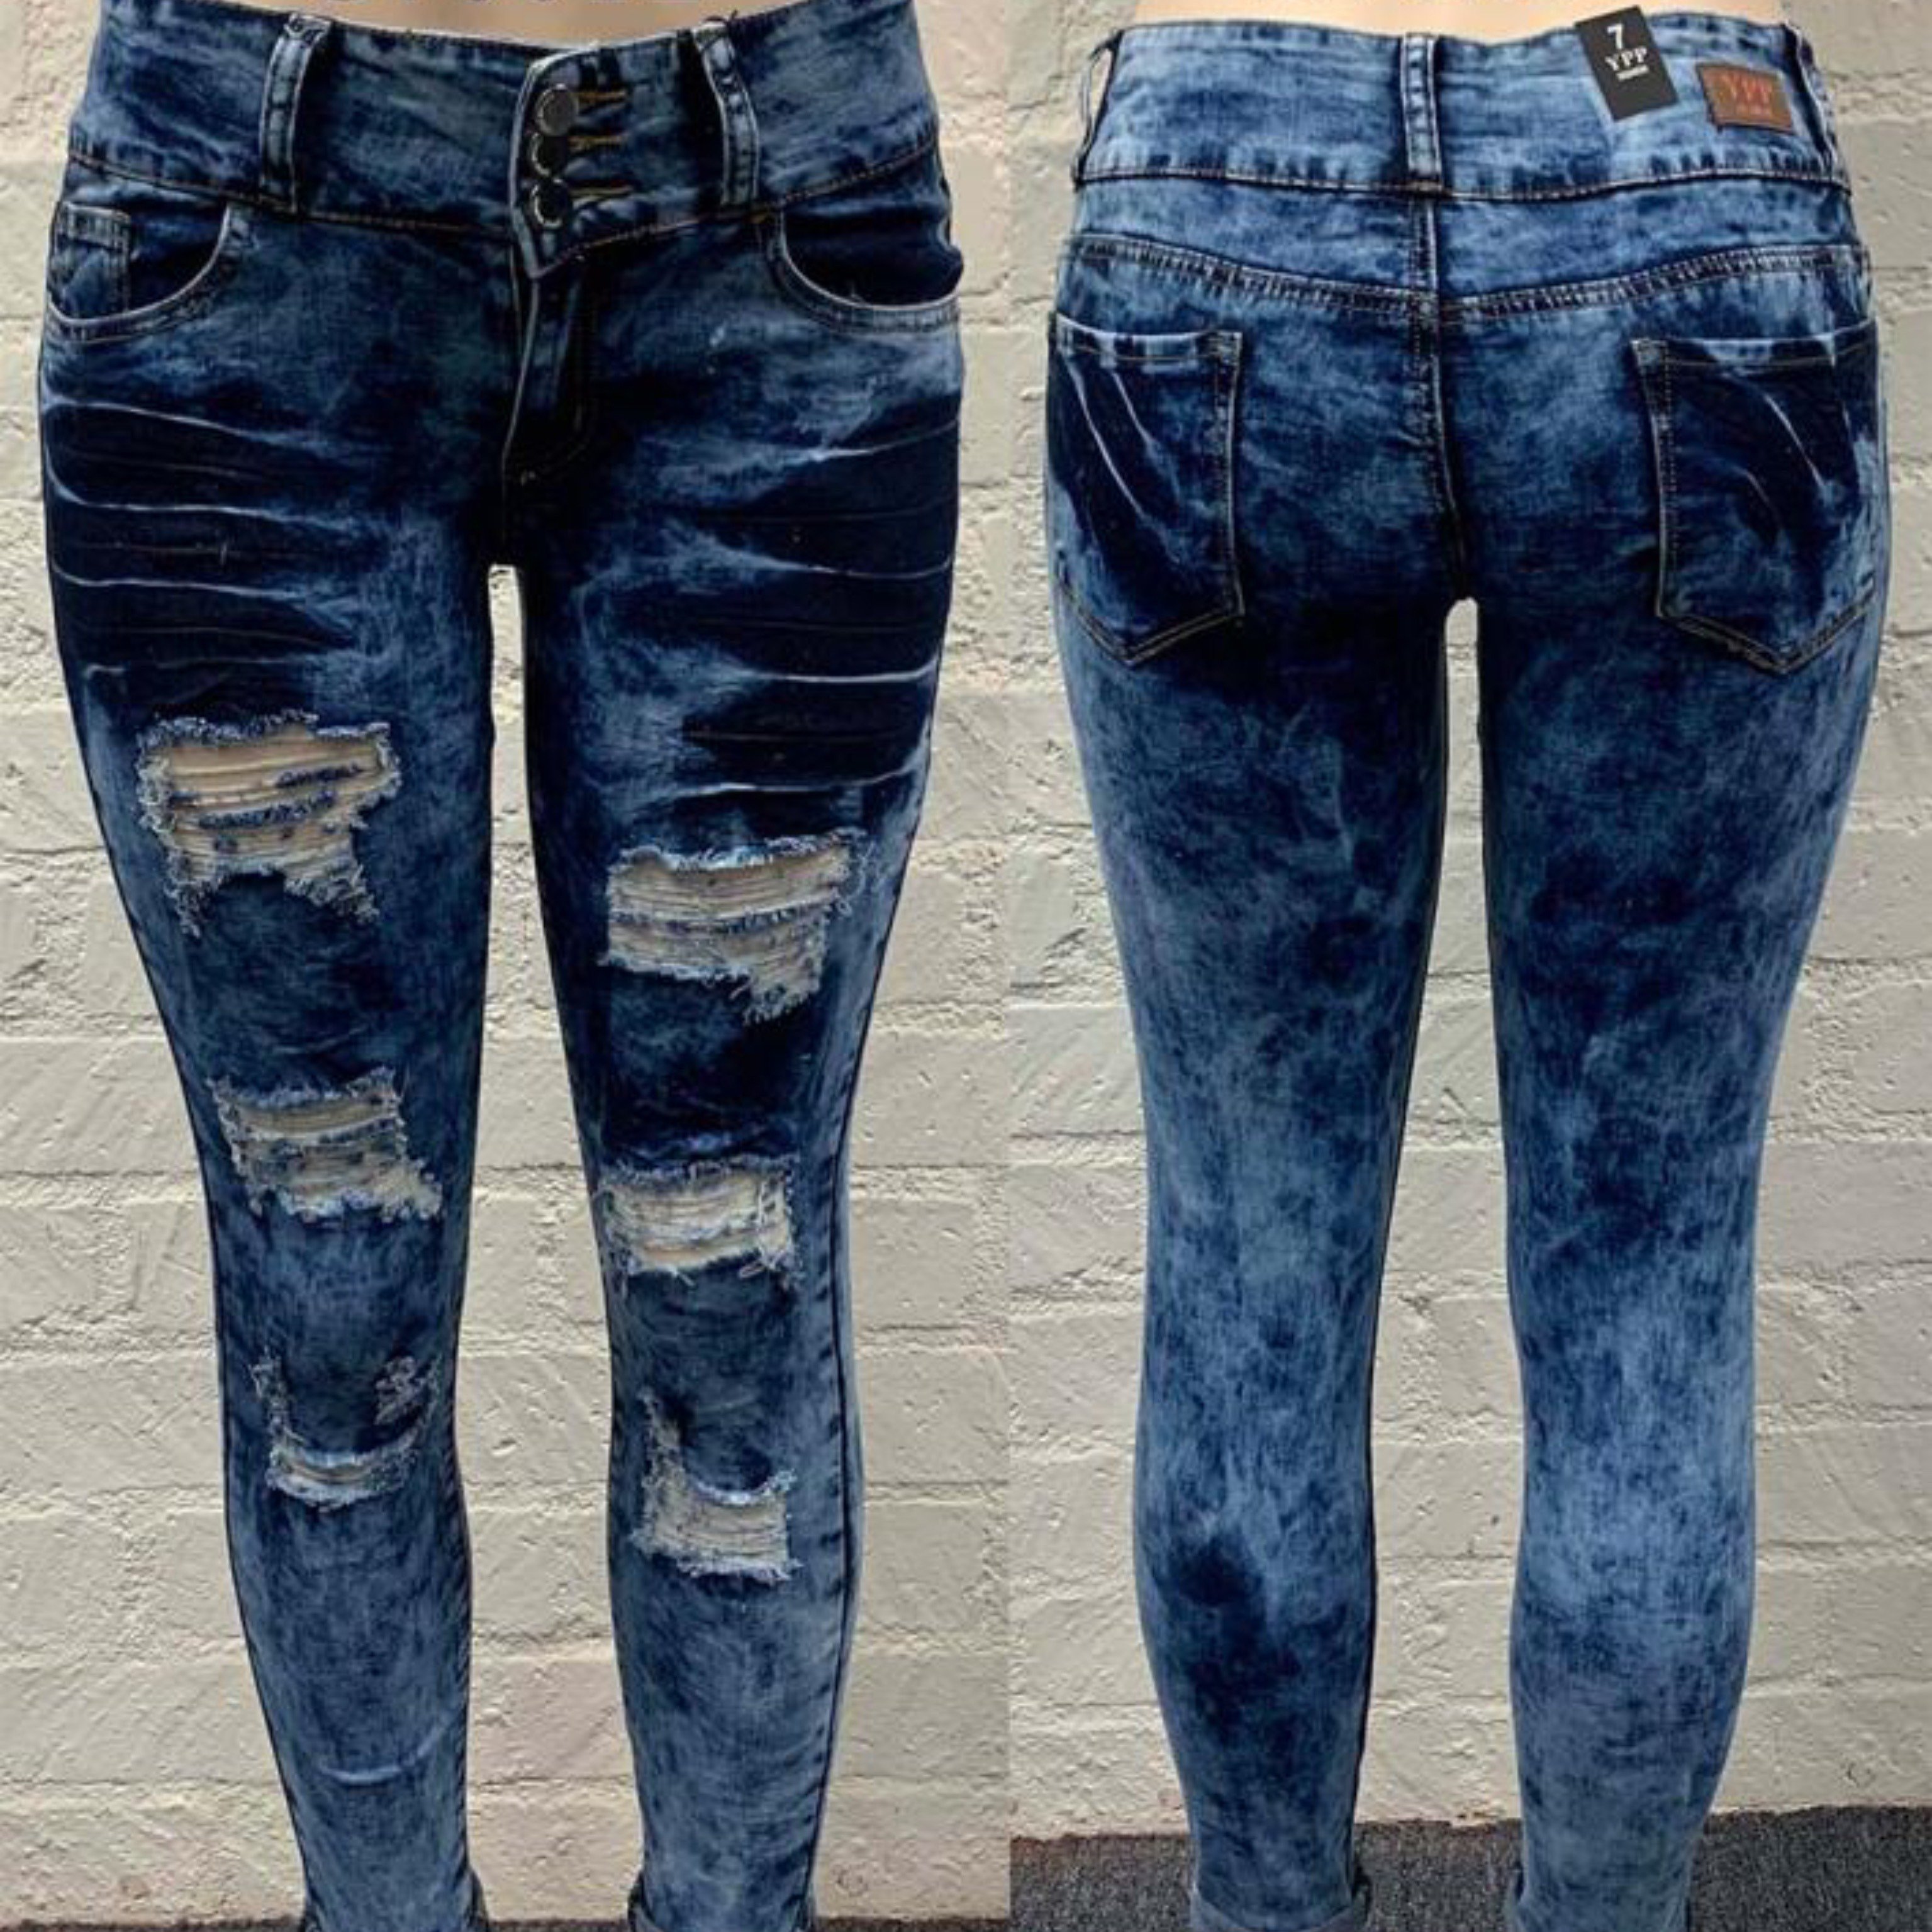 

0012 Women's Dark Blue Washed Plain Stretchy Skinny Jeans, Elegant Style, Denim Pants For Casual Wear